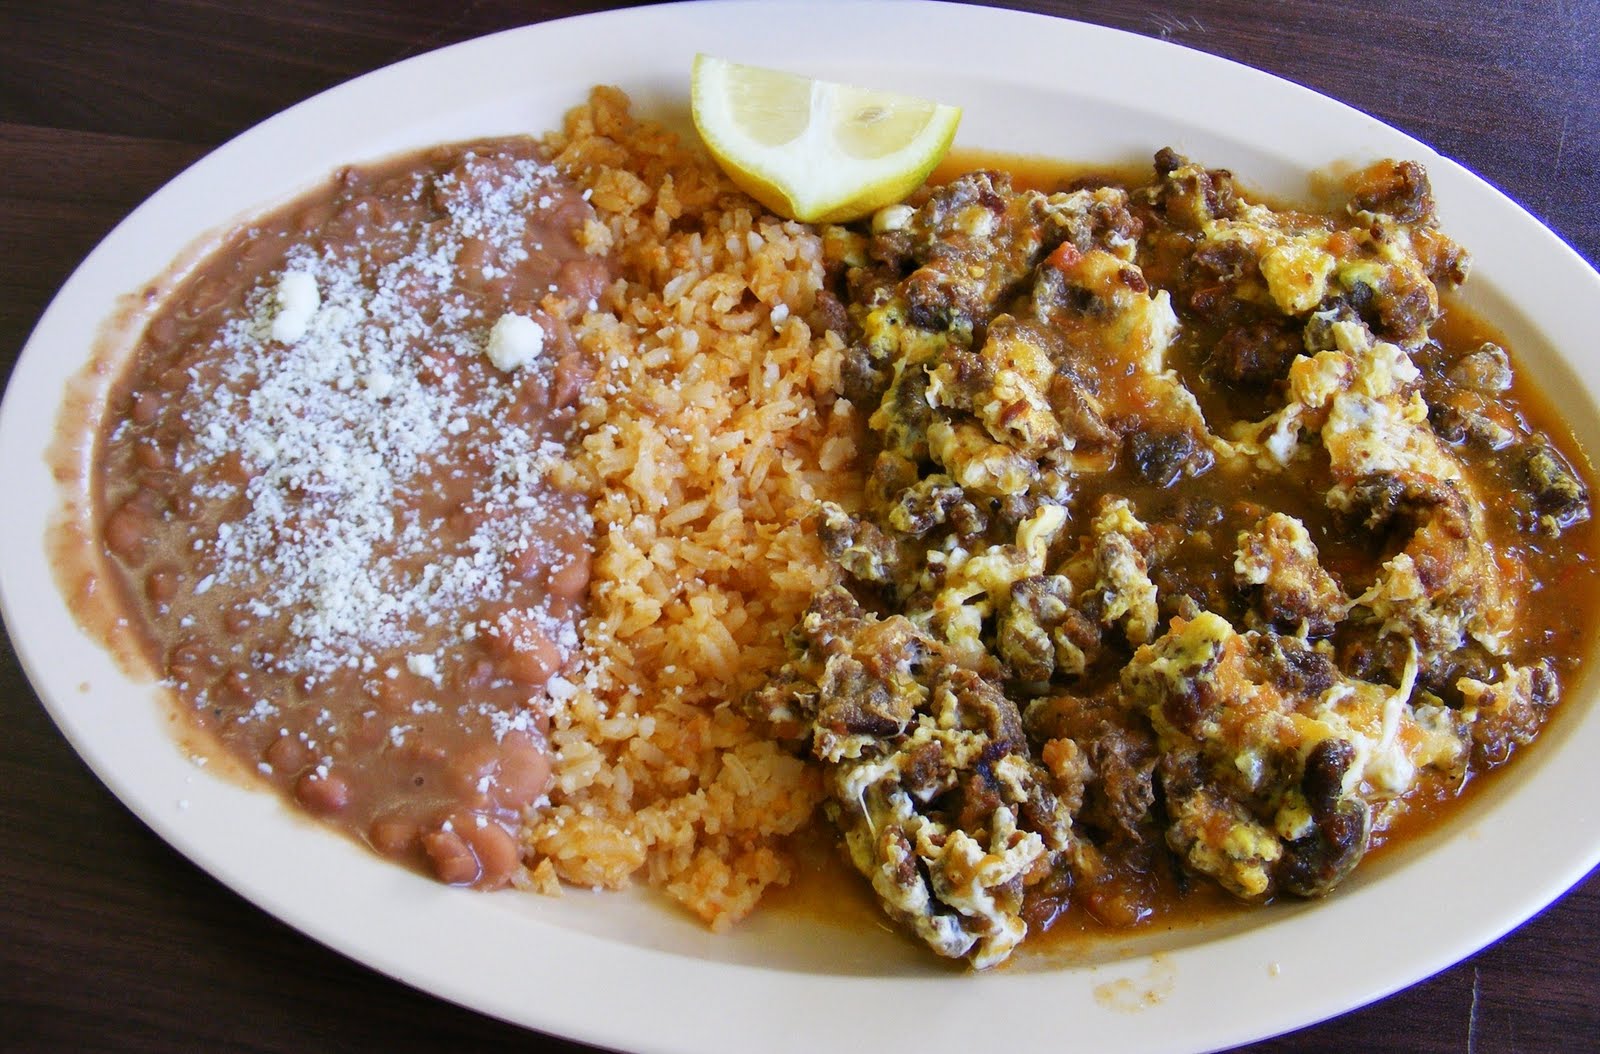 Street Gourmet LA: Birrieria Apatzingan, Pacoima,CA-The Pleasures of Birria  and Regional Bites from Apatzingan, Michoacan